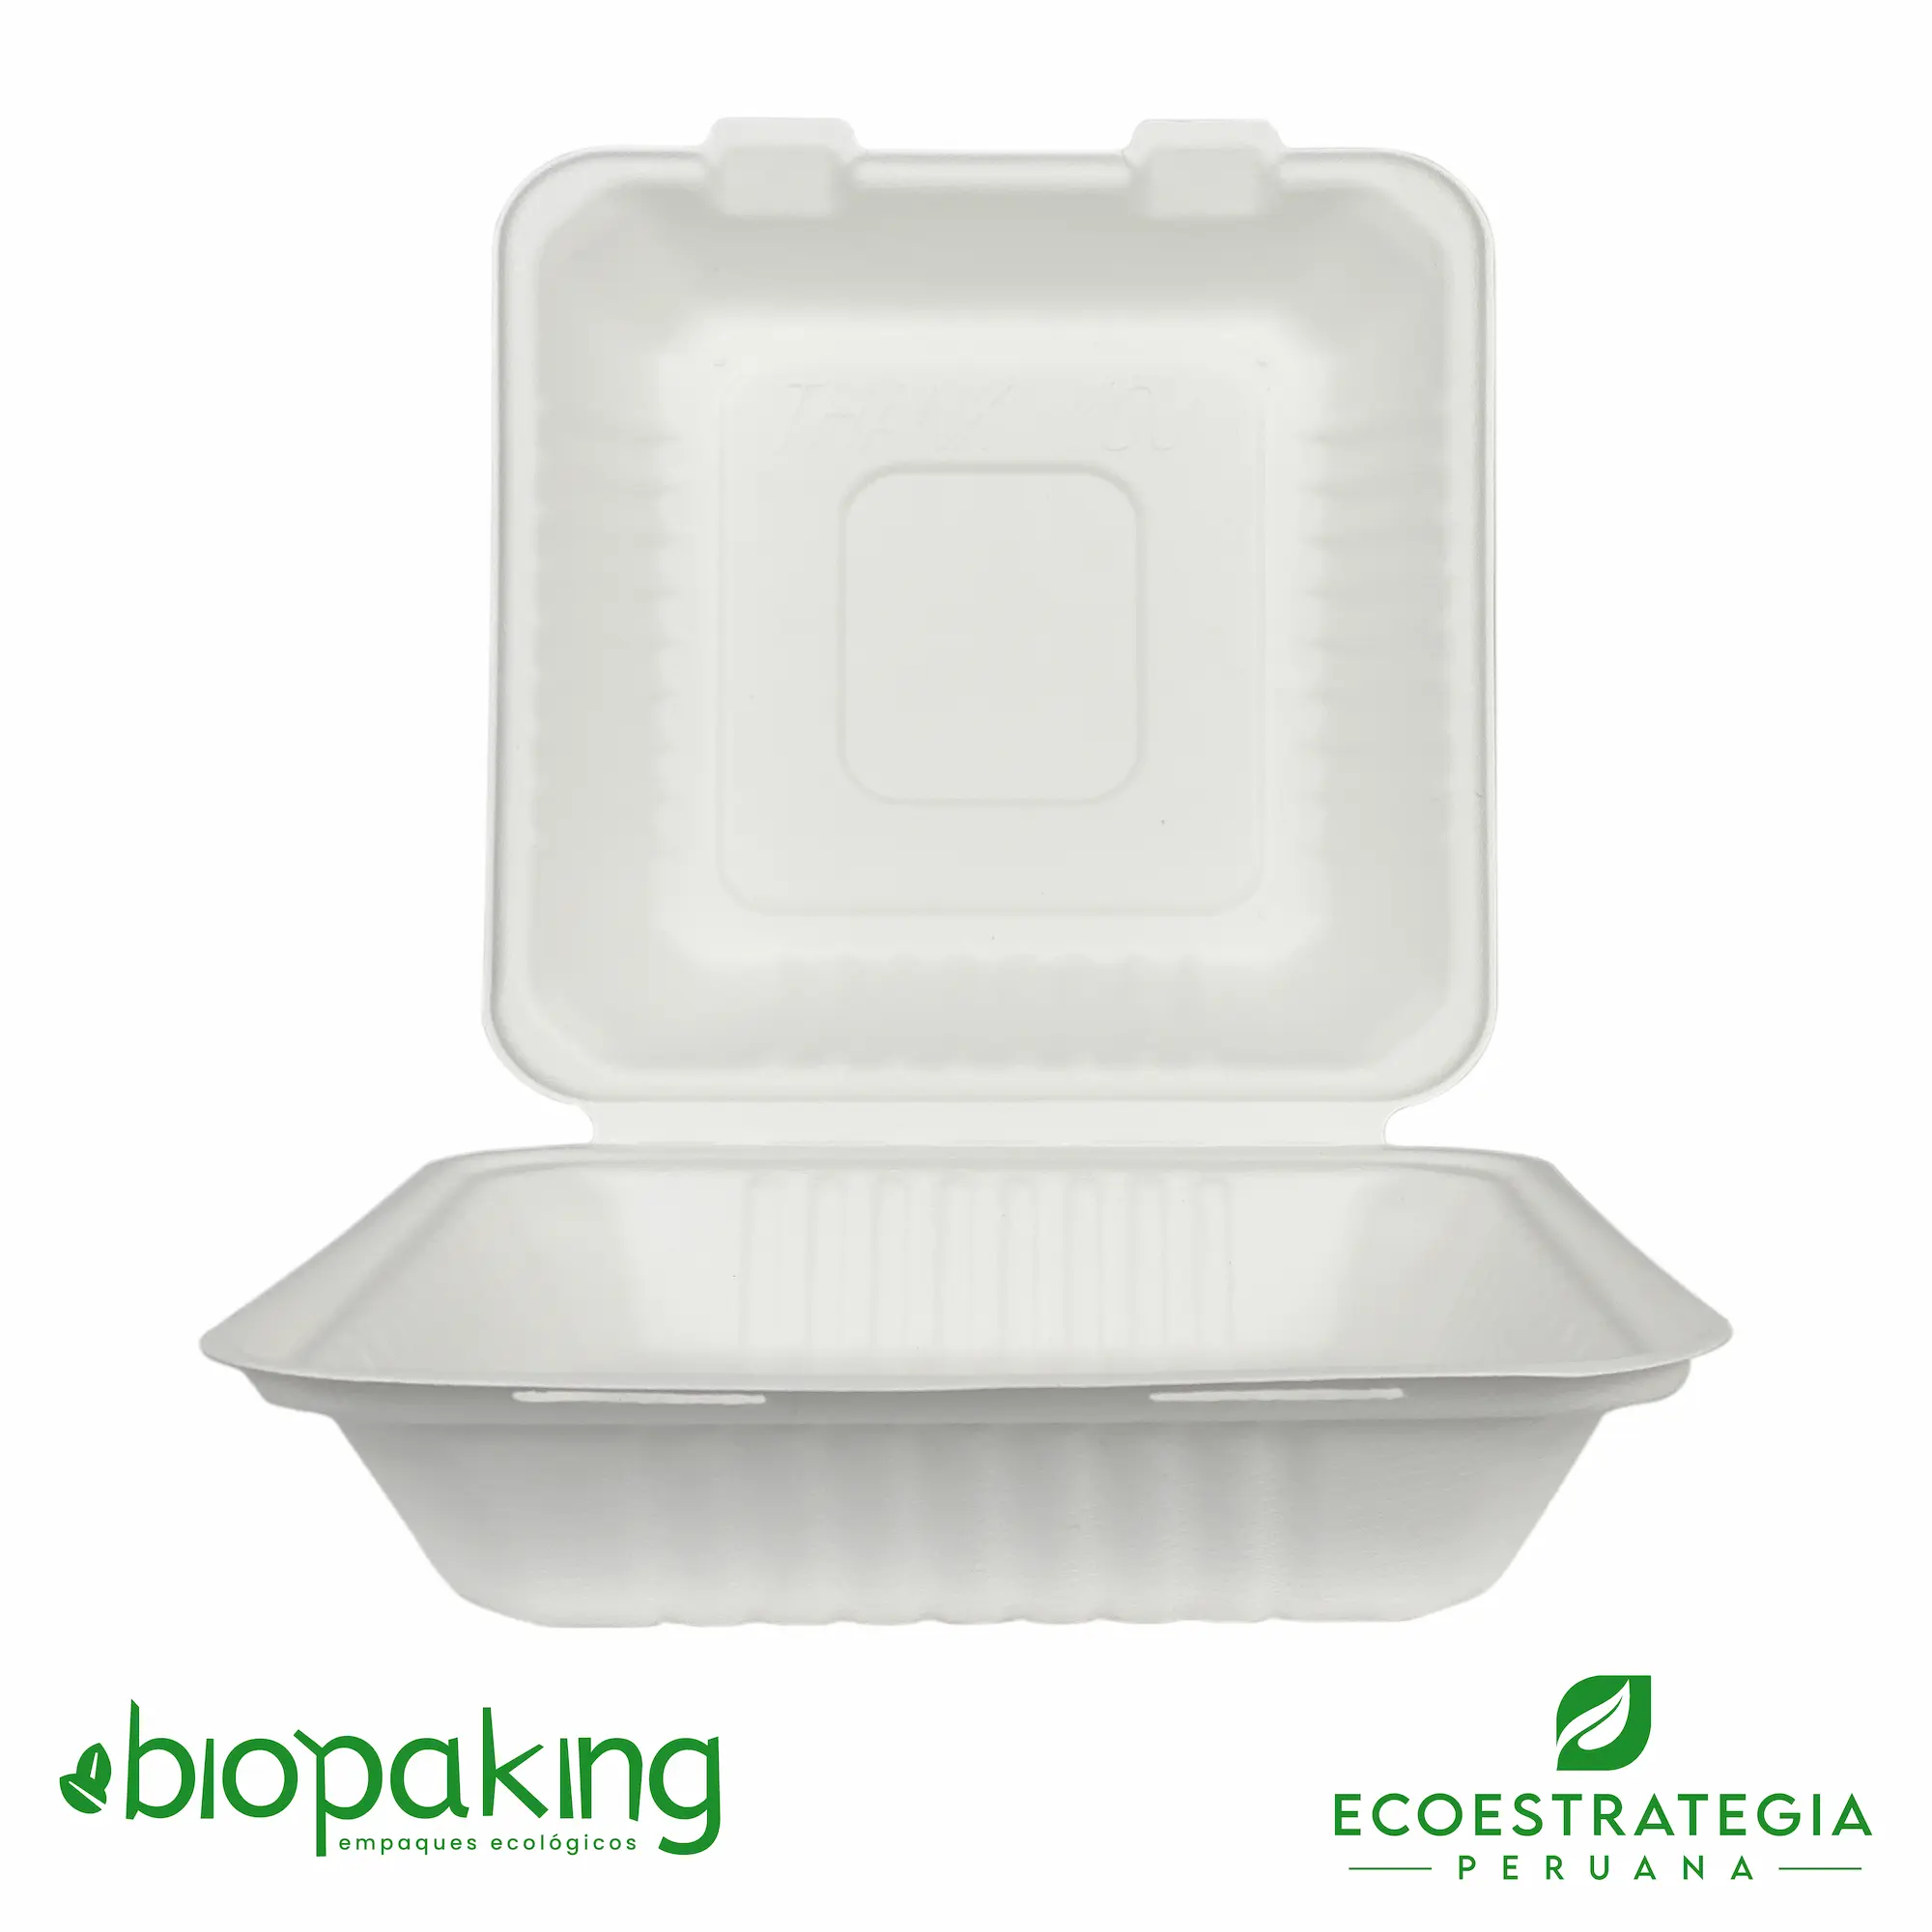 https://www.ecoestrategiaperuana.com/assets/img/productos/envases-biodegradables/ct3/envase-biodegradable-ct3-EP09-0.webp